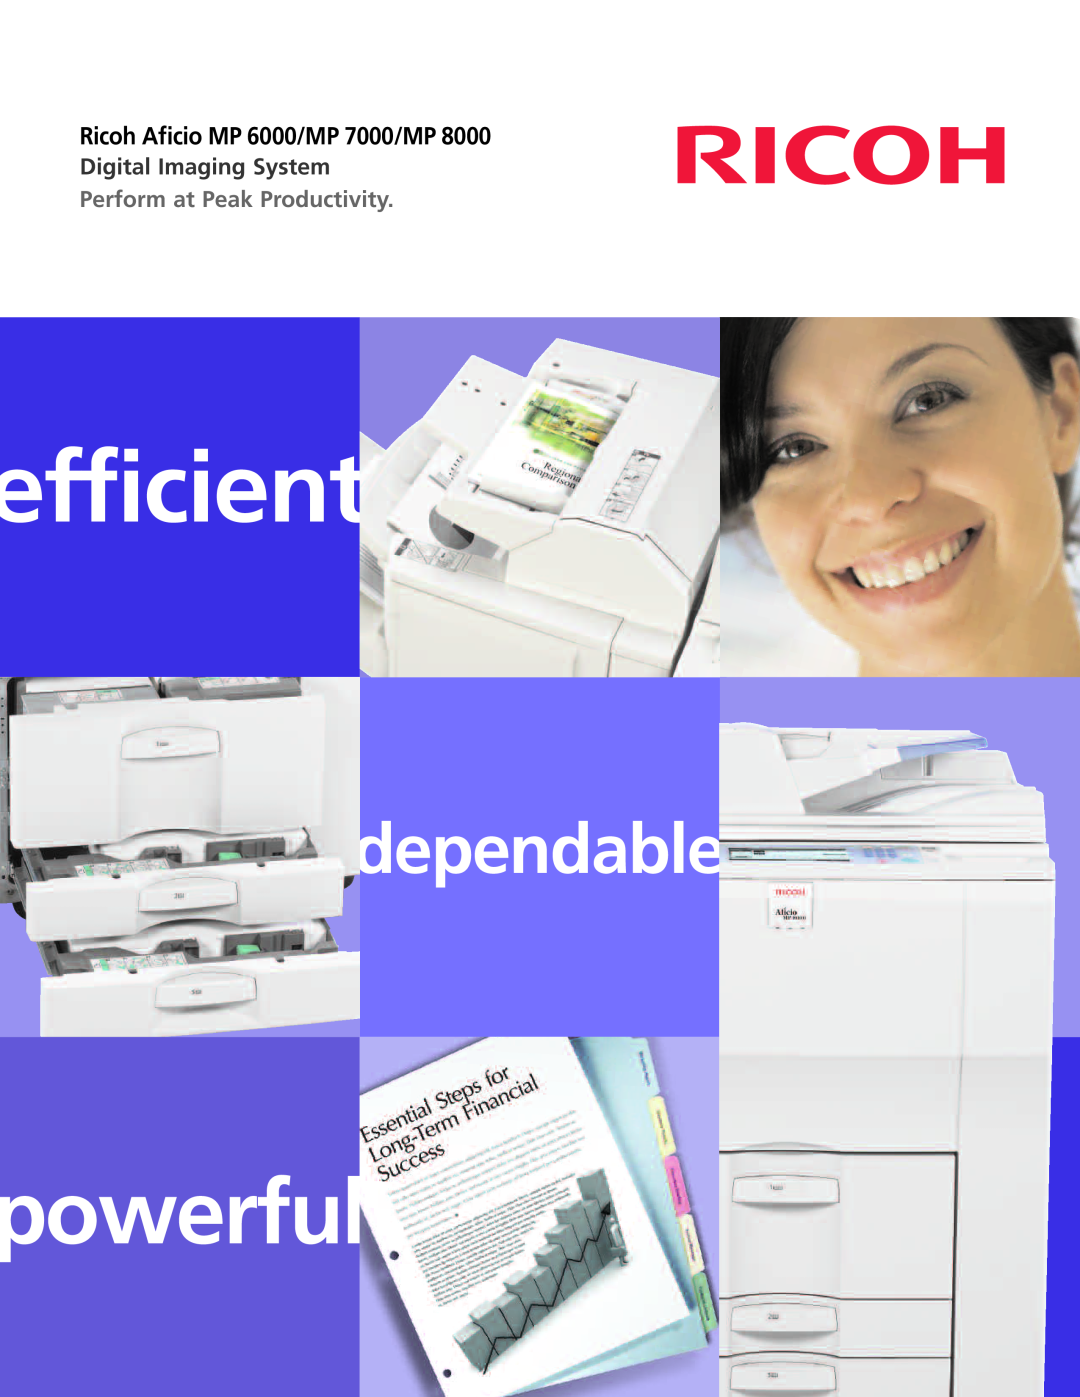 Ricoh MP 8000 manual efficient, powerful, dependable, Ricoh Aficio MP 6000/MP 7000/MP, Digital Imaging System 